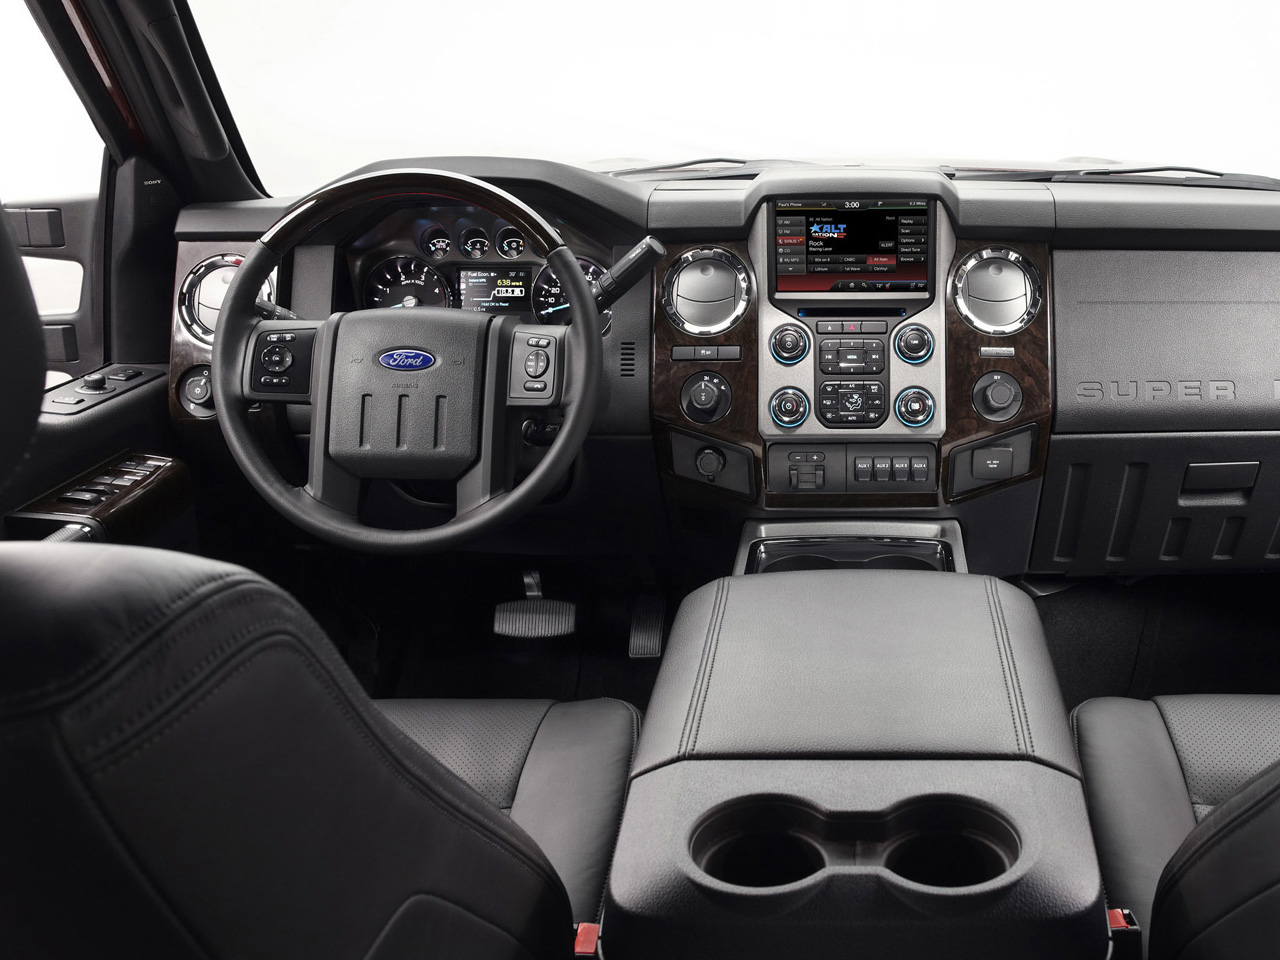 2013 ford harley davidson truck ford designed and ford built 6 7 liter power stroke diesel engine or 